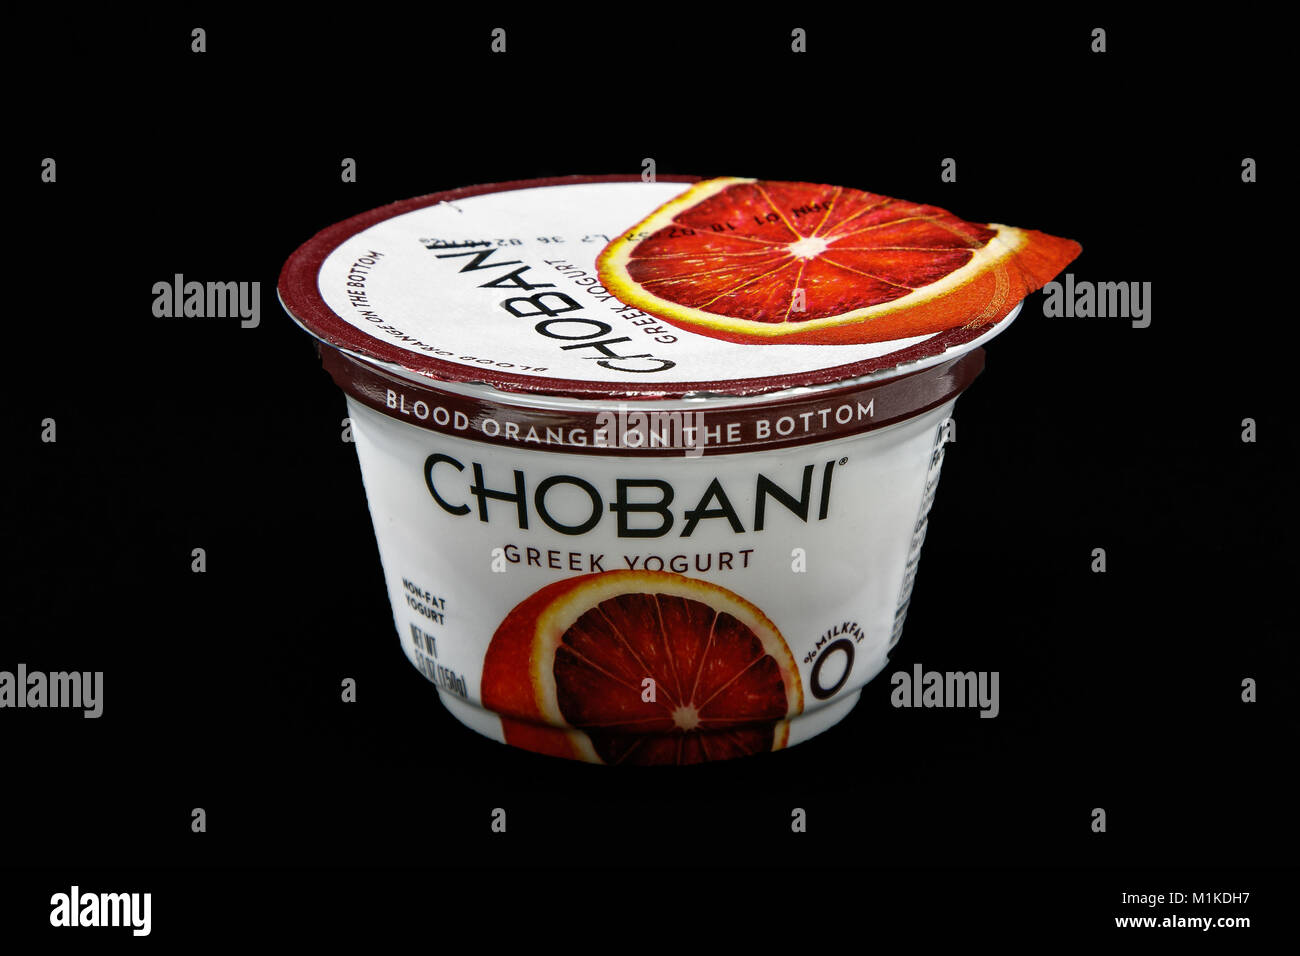 New York, December 4, 2017:  Tub of Chobani blood orange yogurt stands against black background. Stock Photo